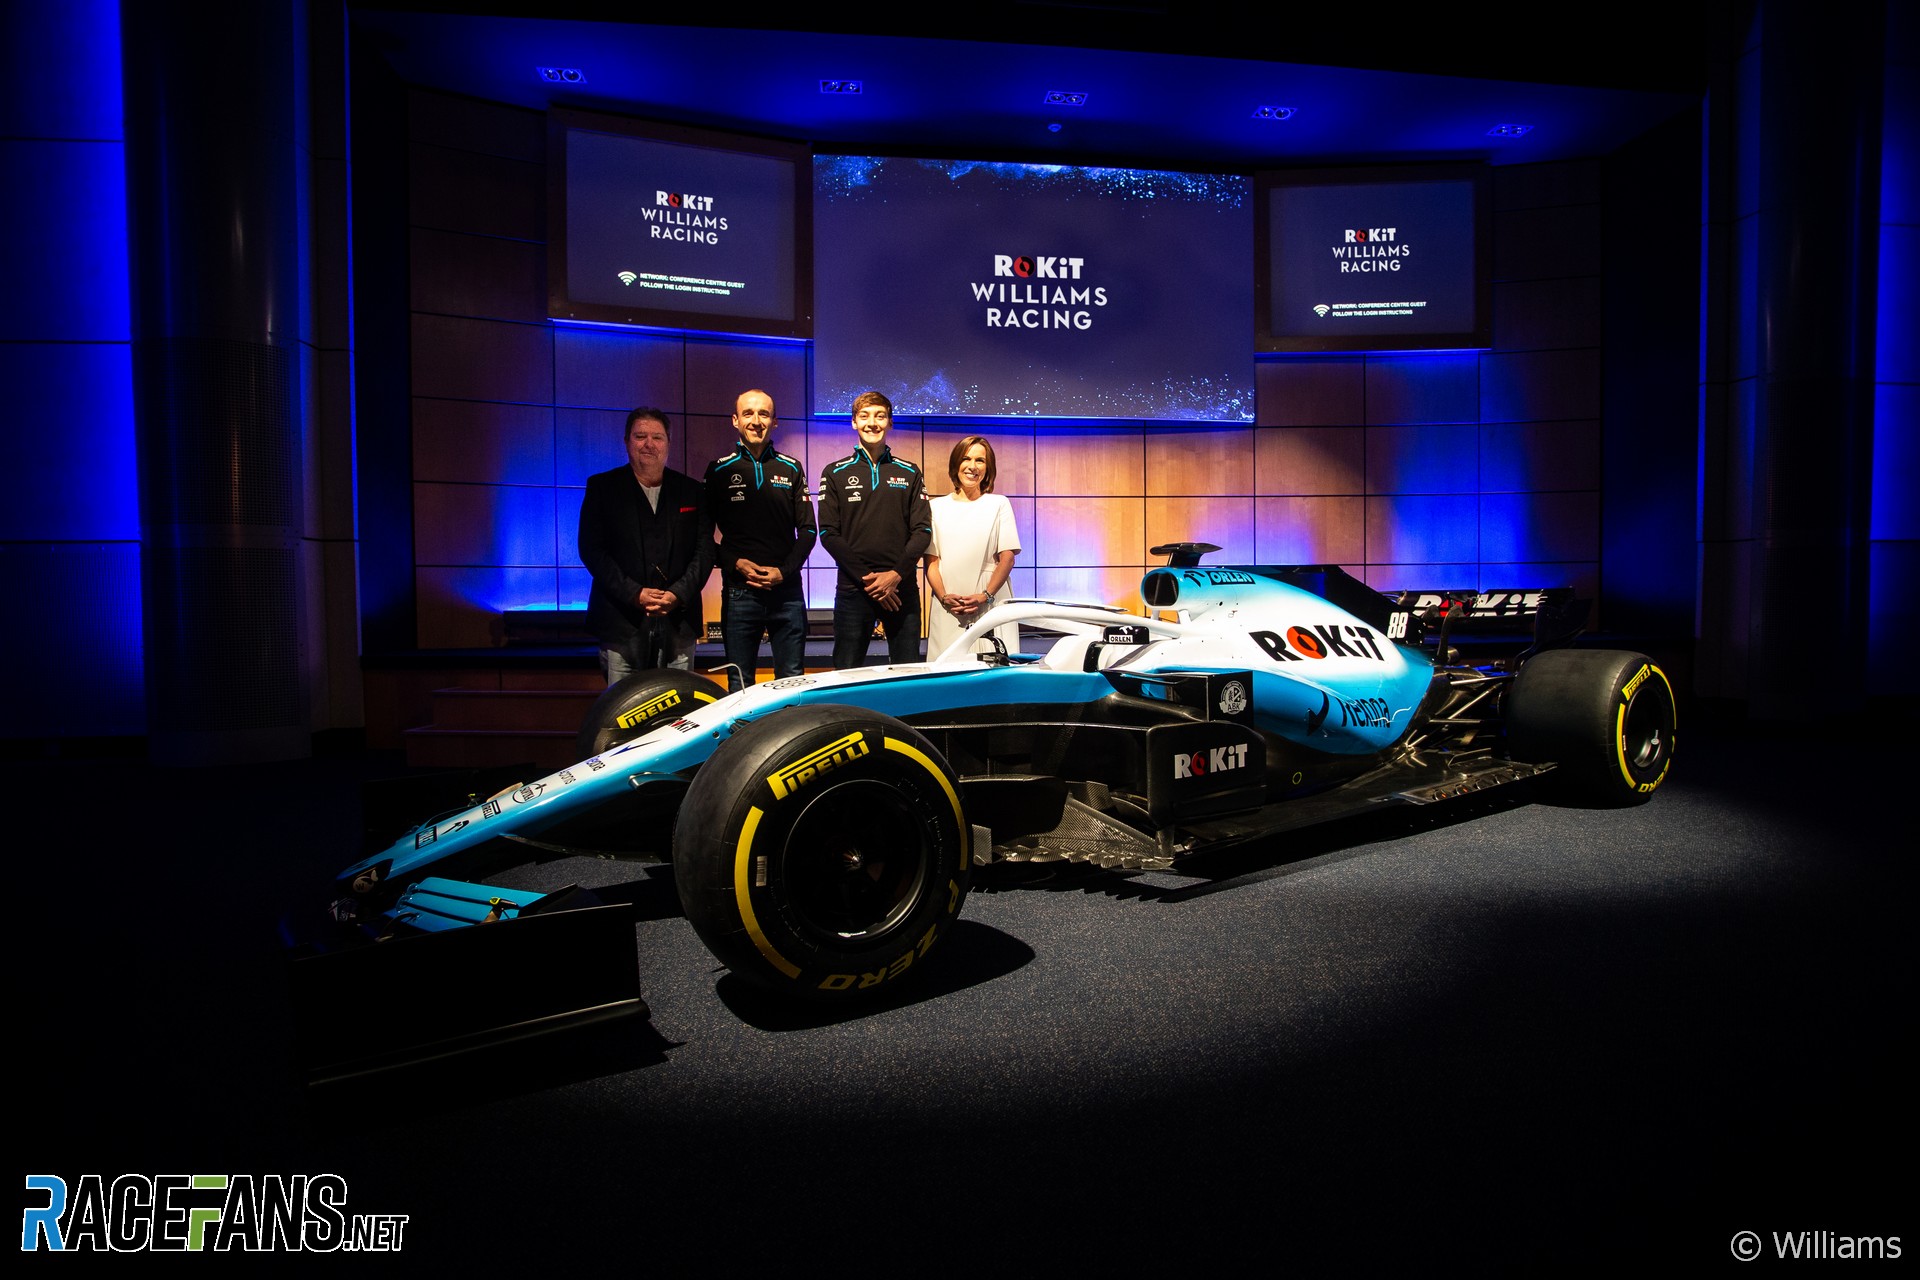 Williams 2019 livery on 2018 F1 car